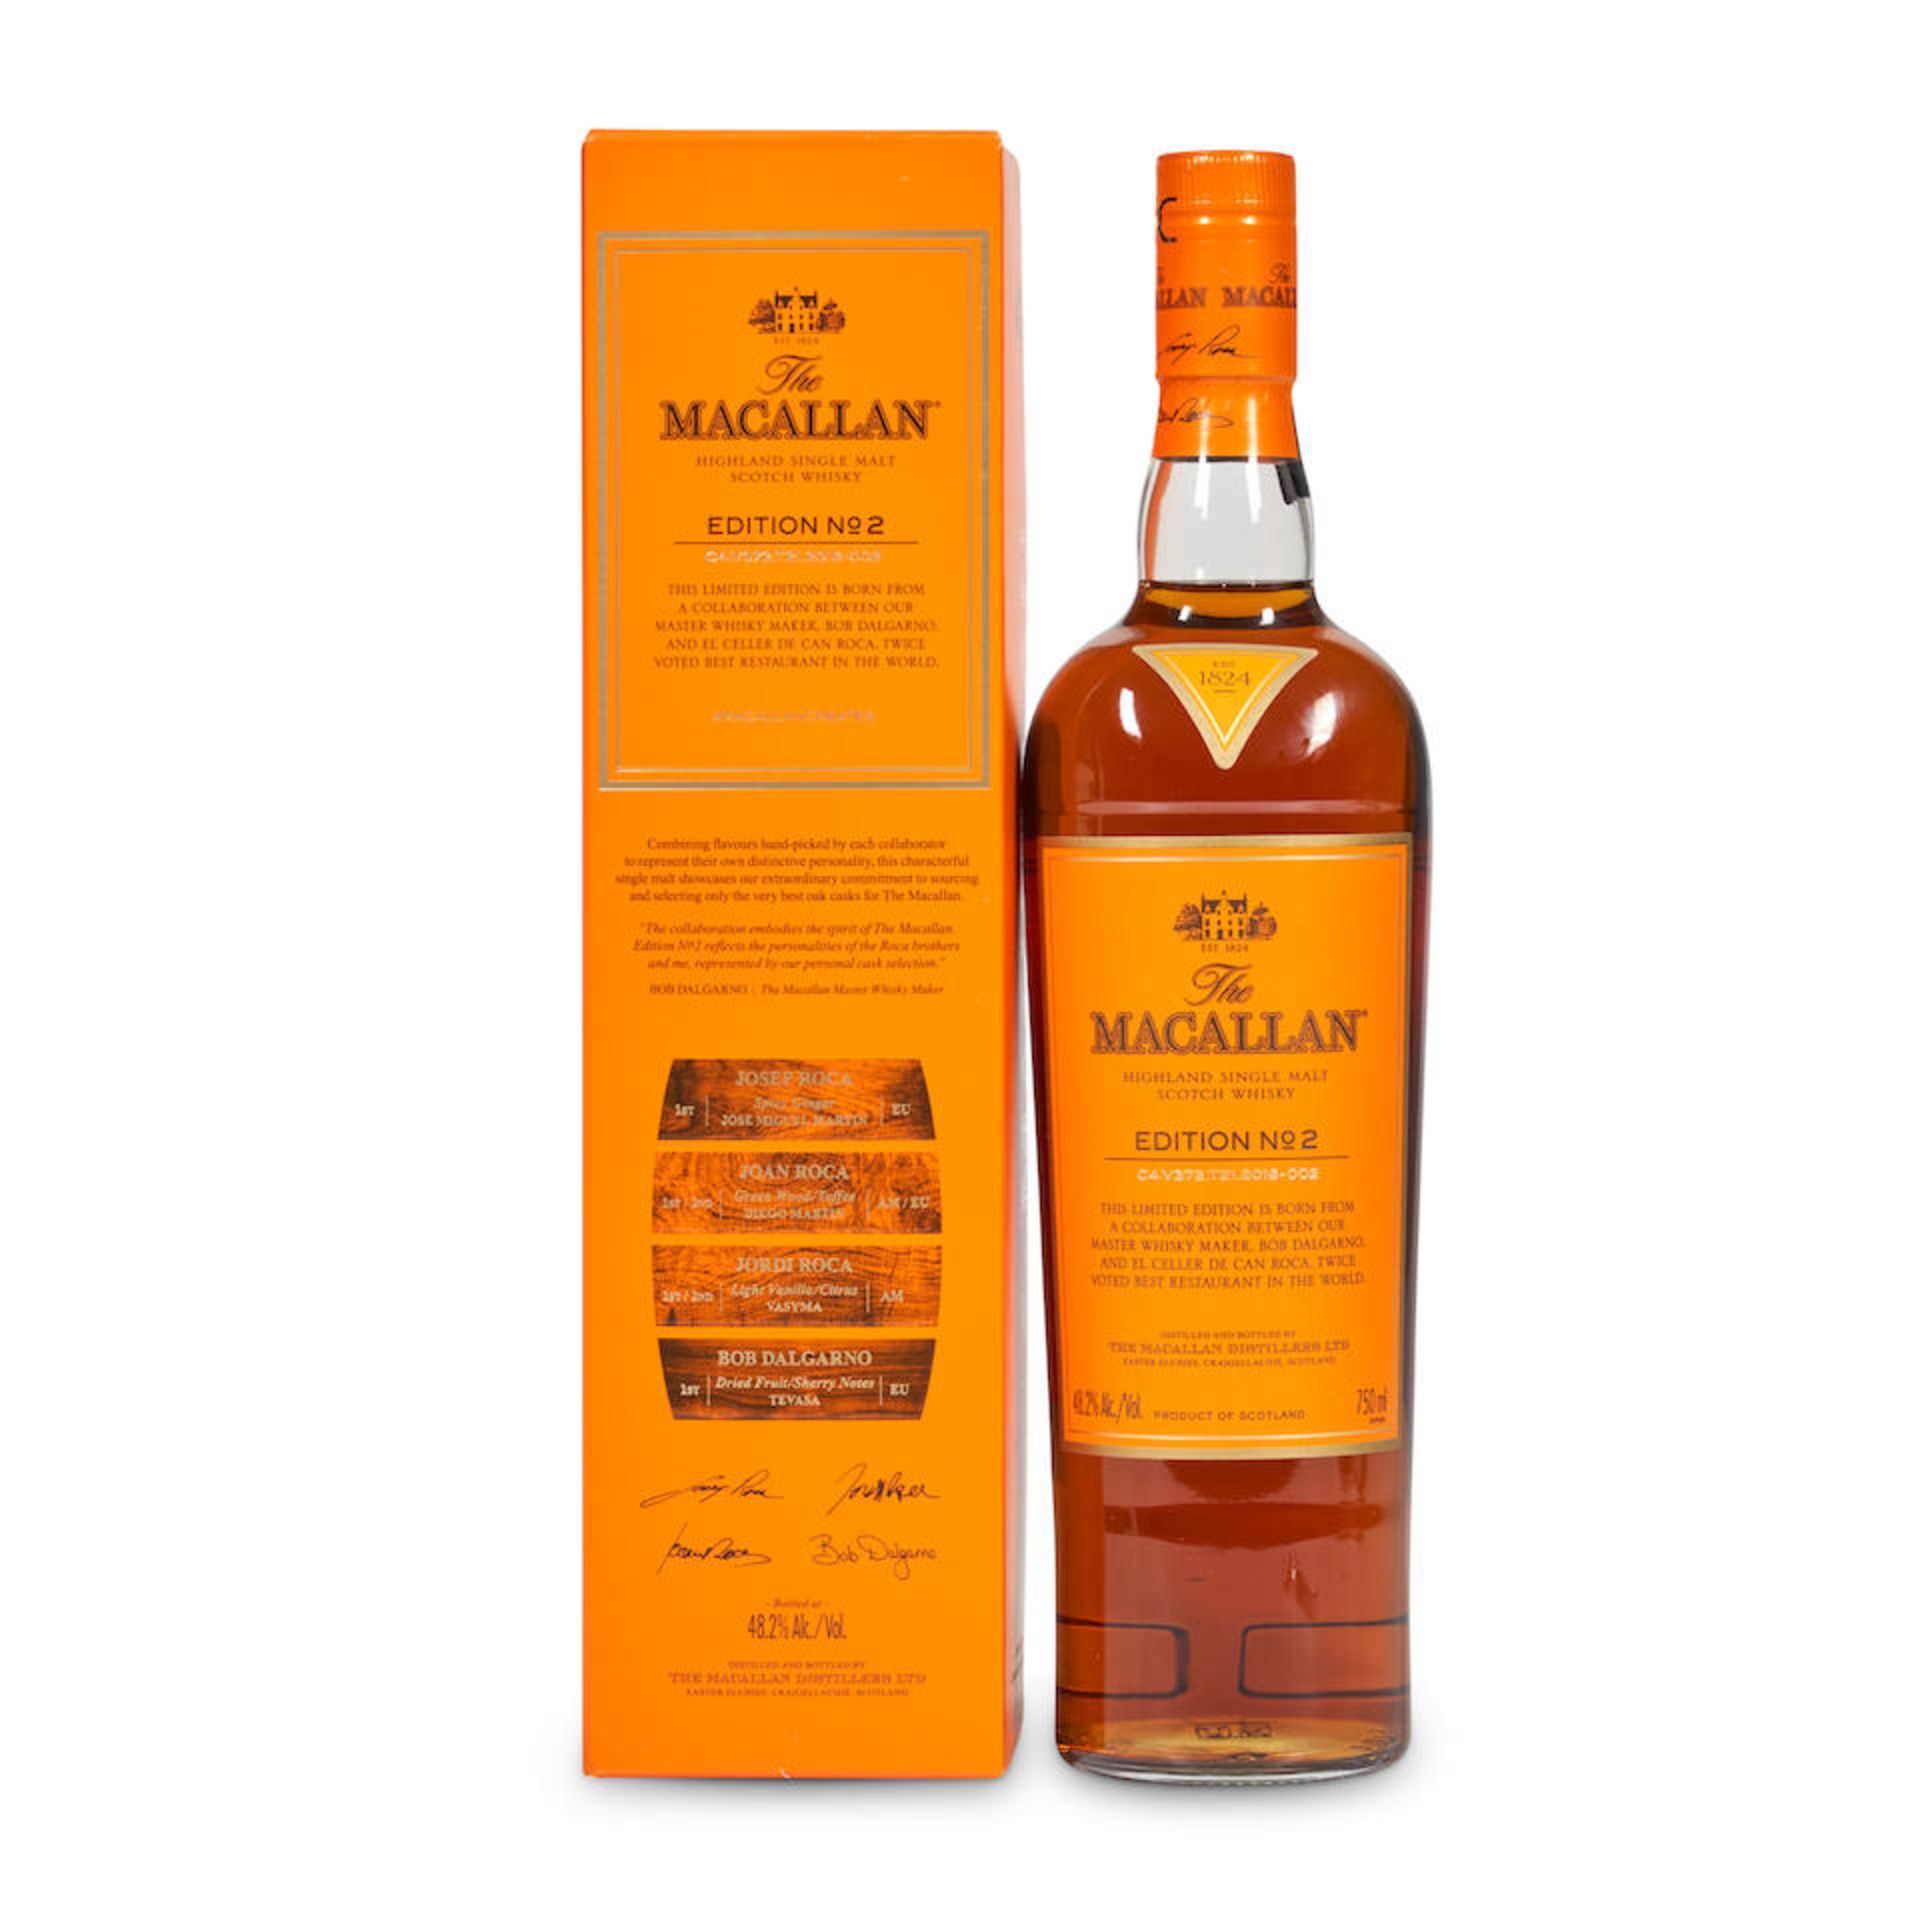 Macallan Edition 2 (1 750ml bottle)